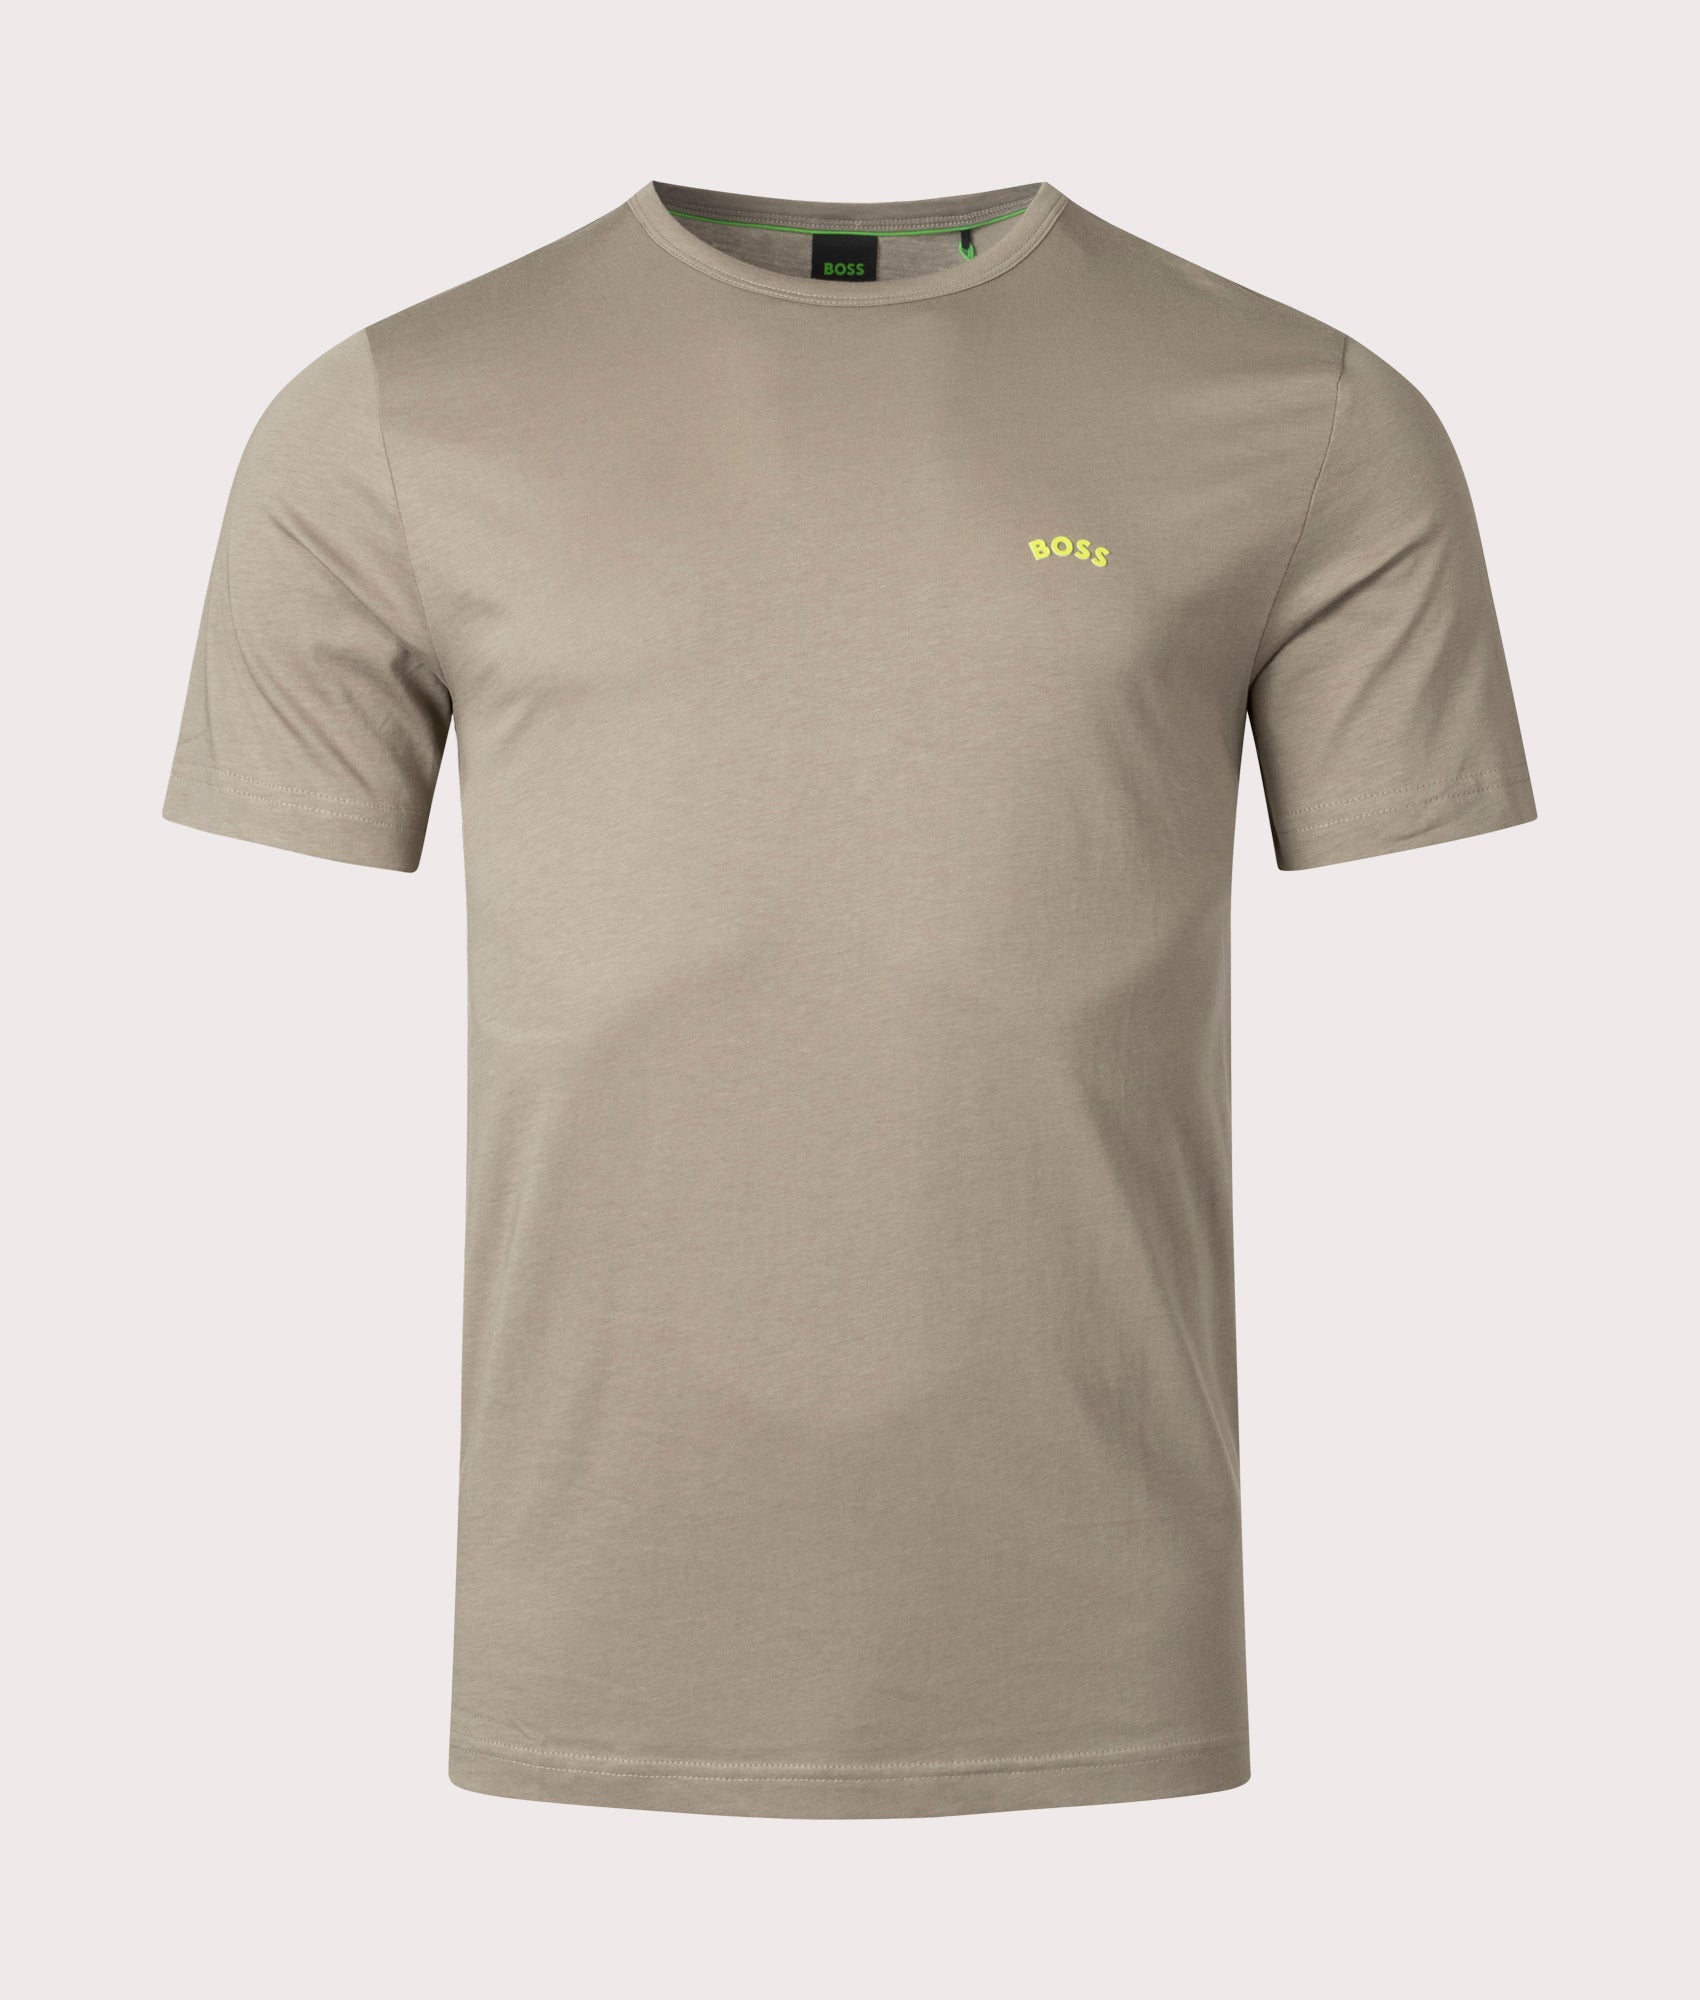 BOSS Mens Curved Logo T-Shirt - Colour: 335 Light/Pastel Green - Size: Medium